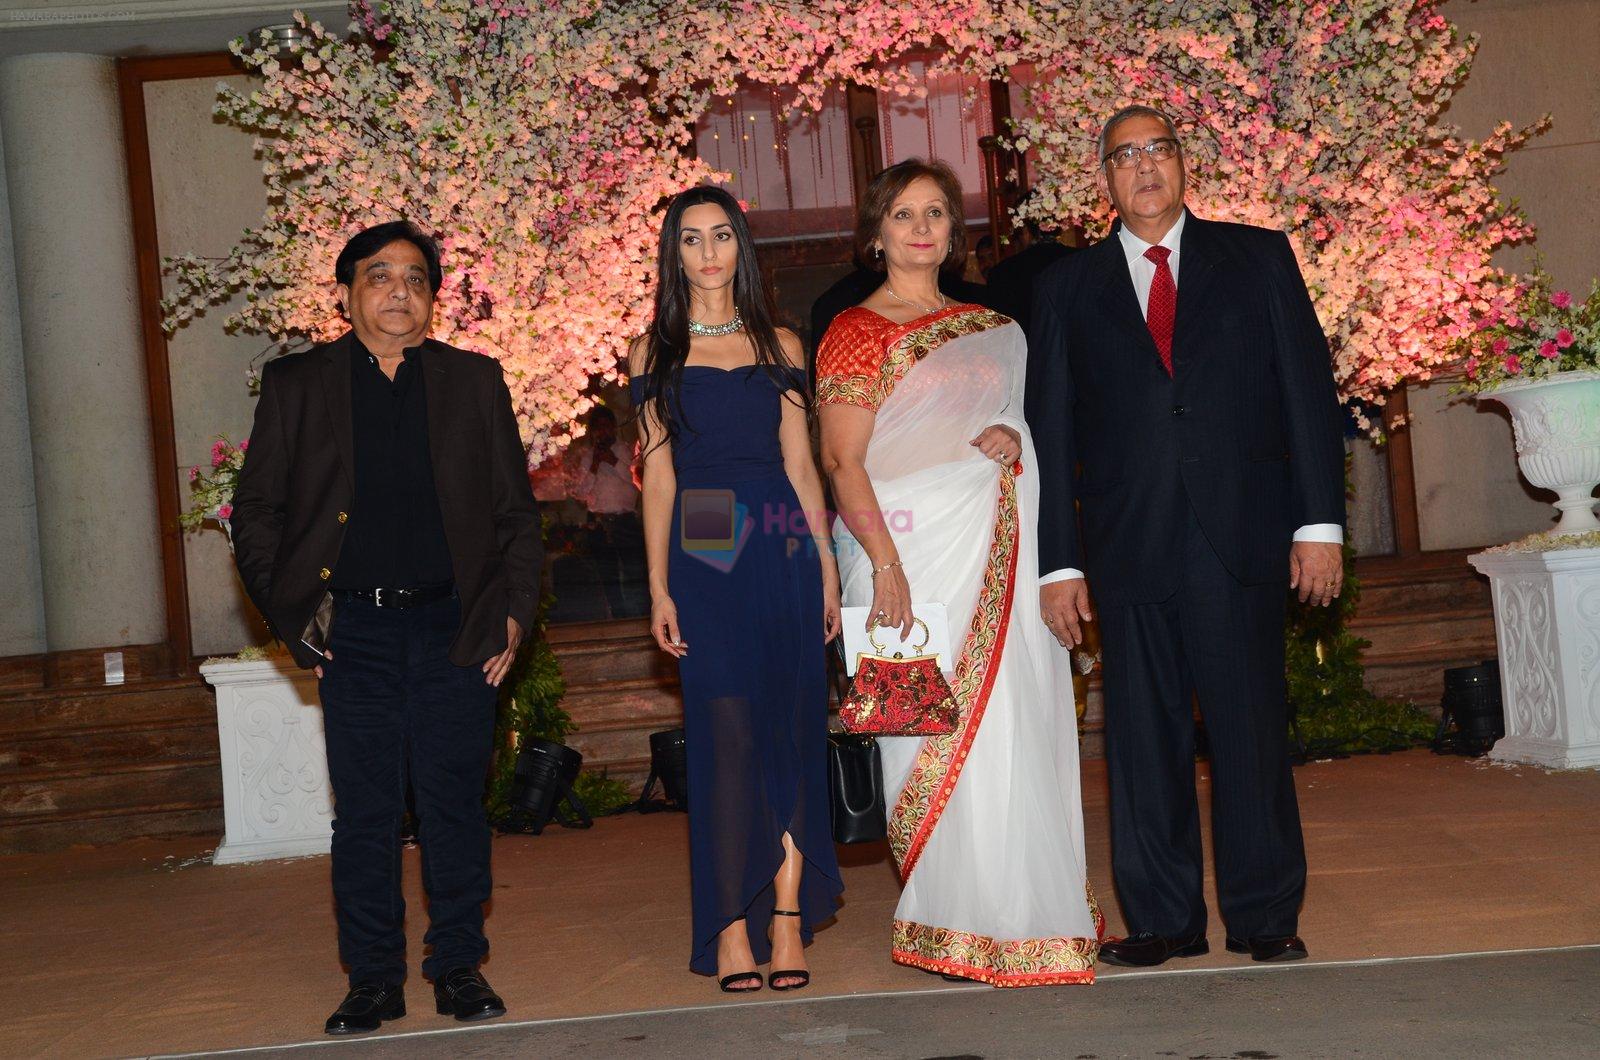 at Wedding reception of stylist Shaina Nath daughter of Rakesh Nath on 17th Nov 2016